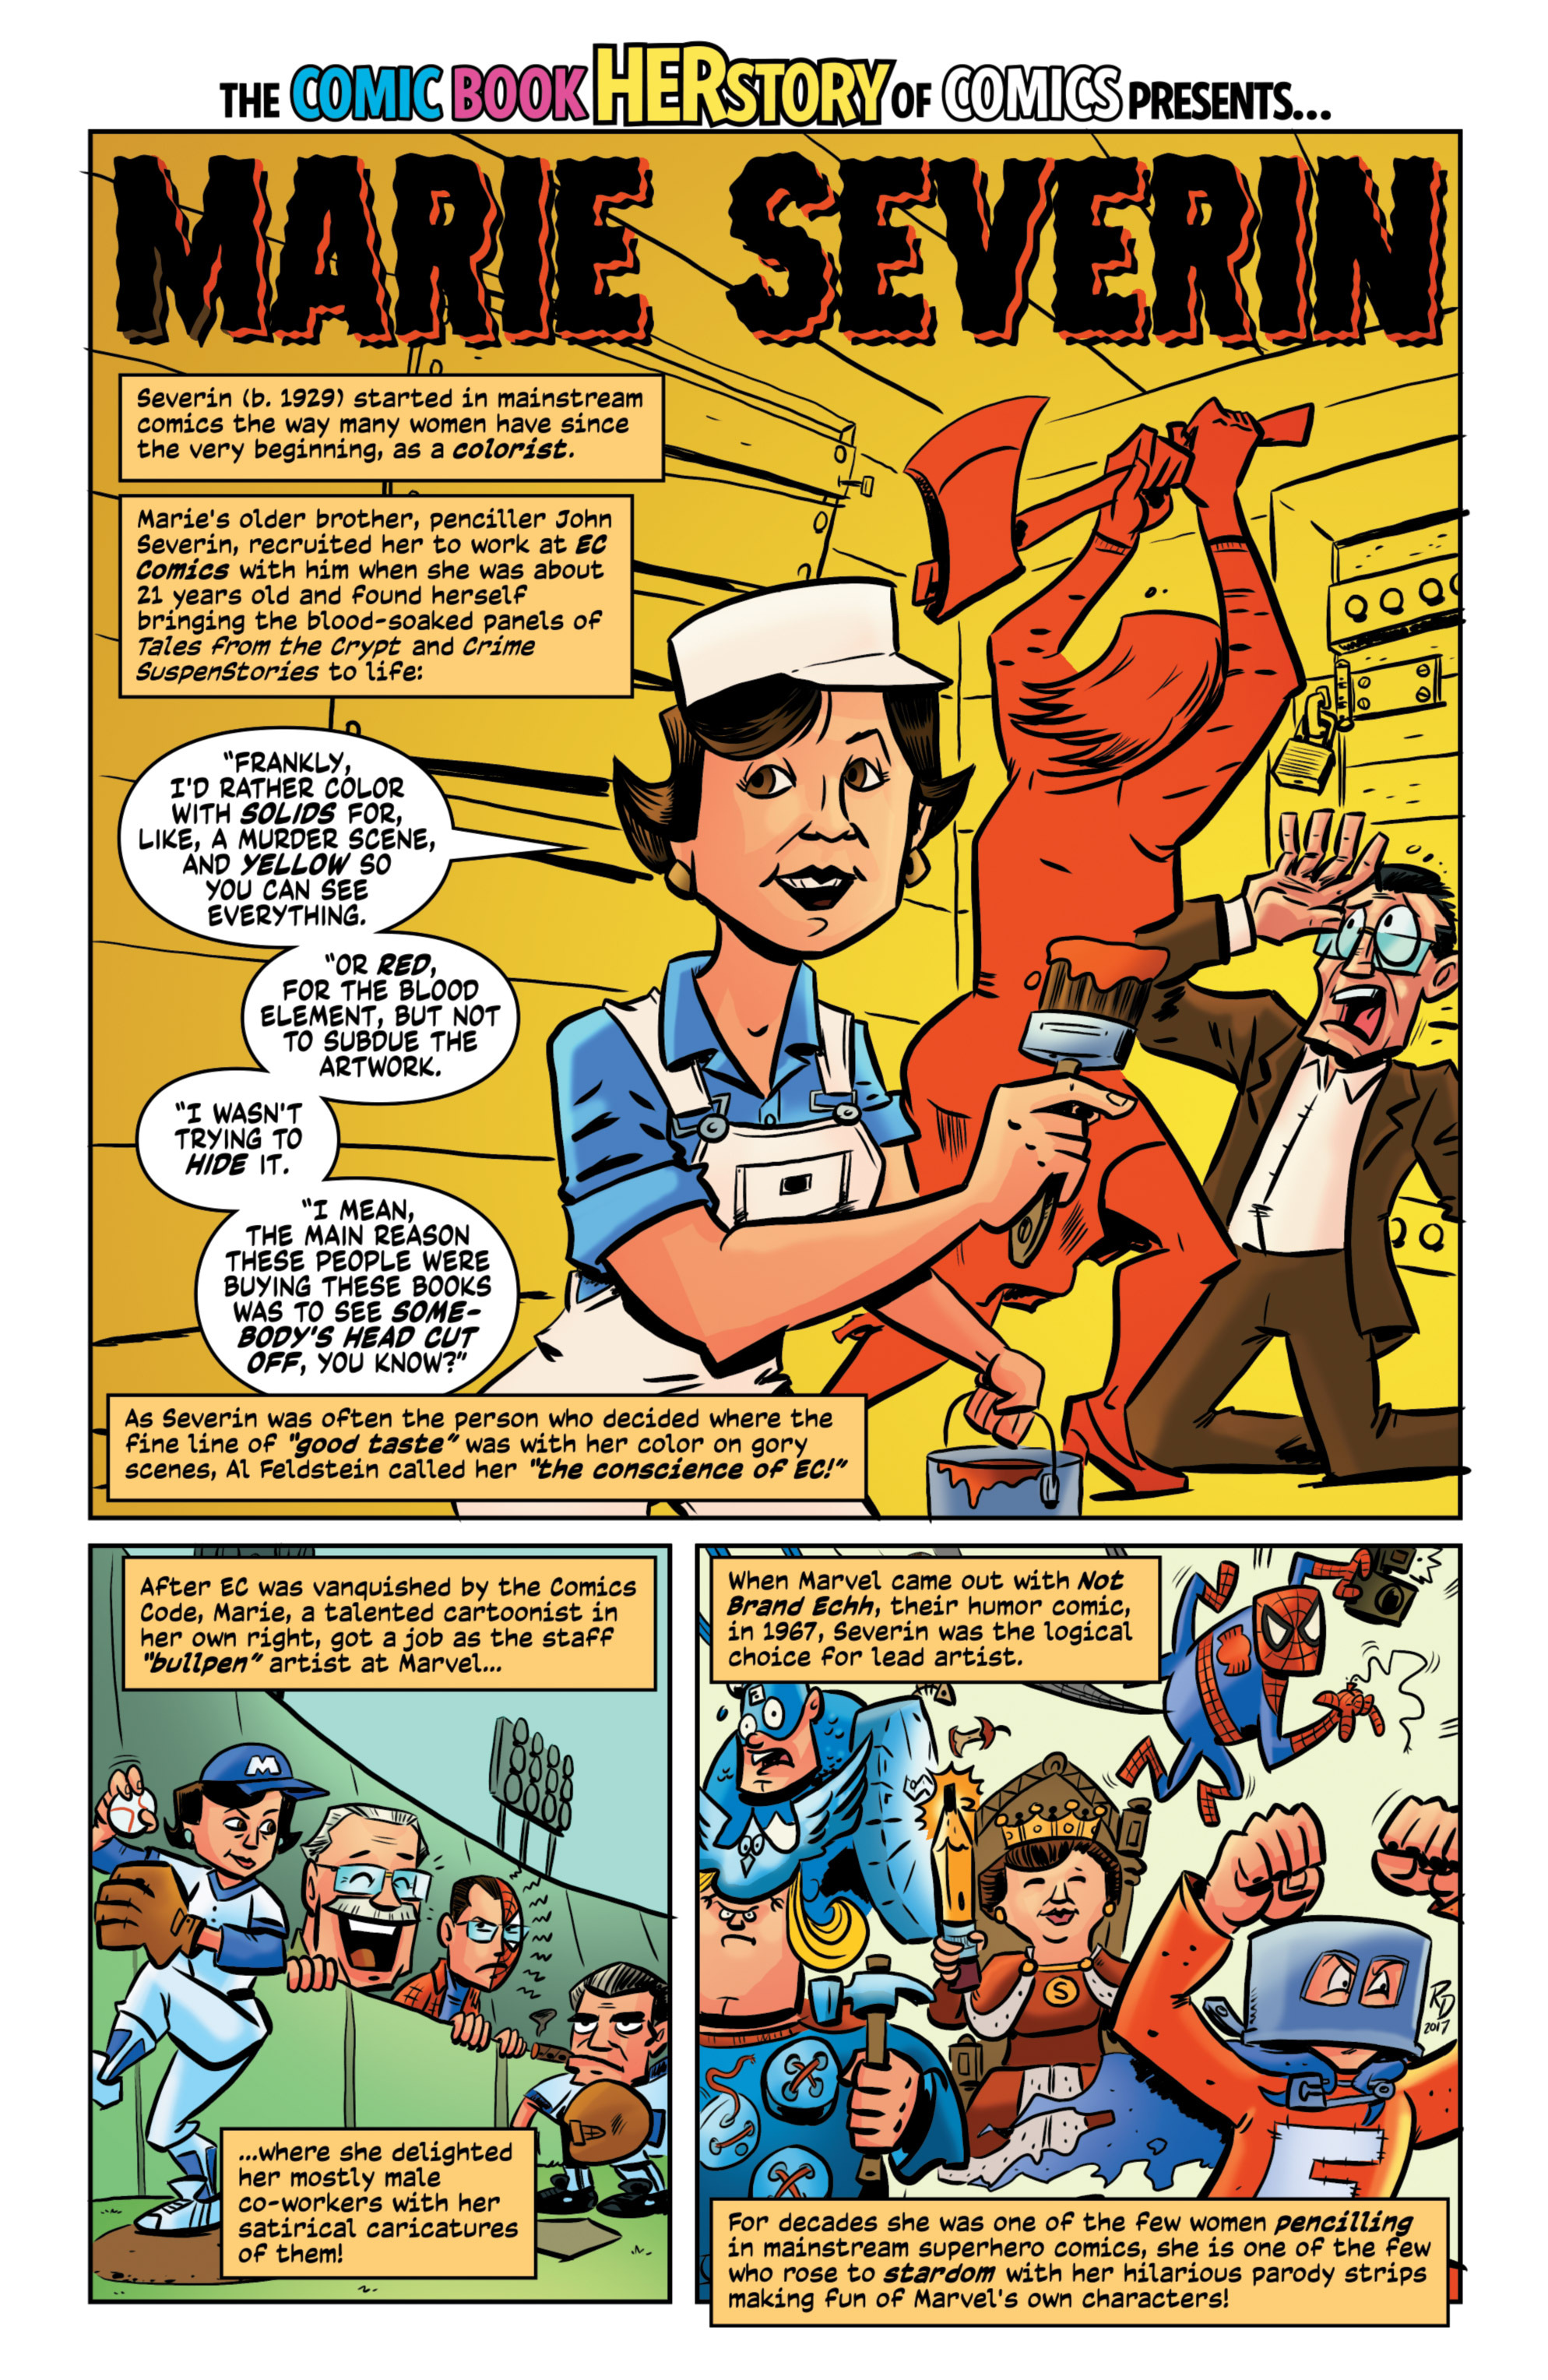 Read online Comic Book History of Comics comic -  Issue #5 - 26